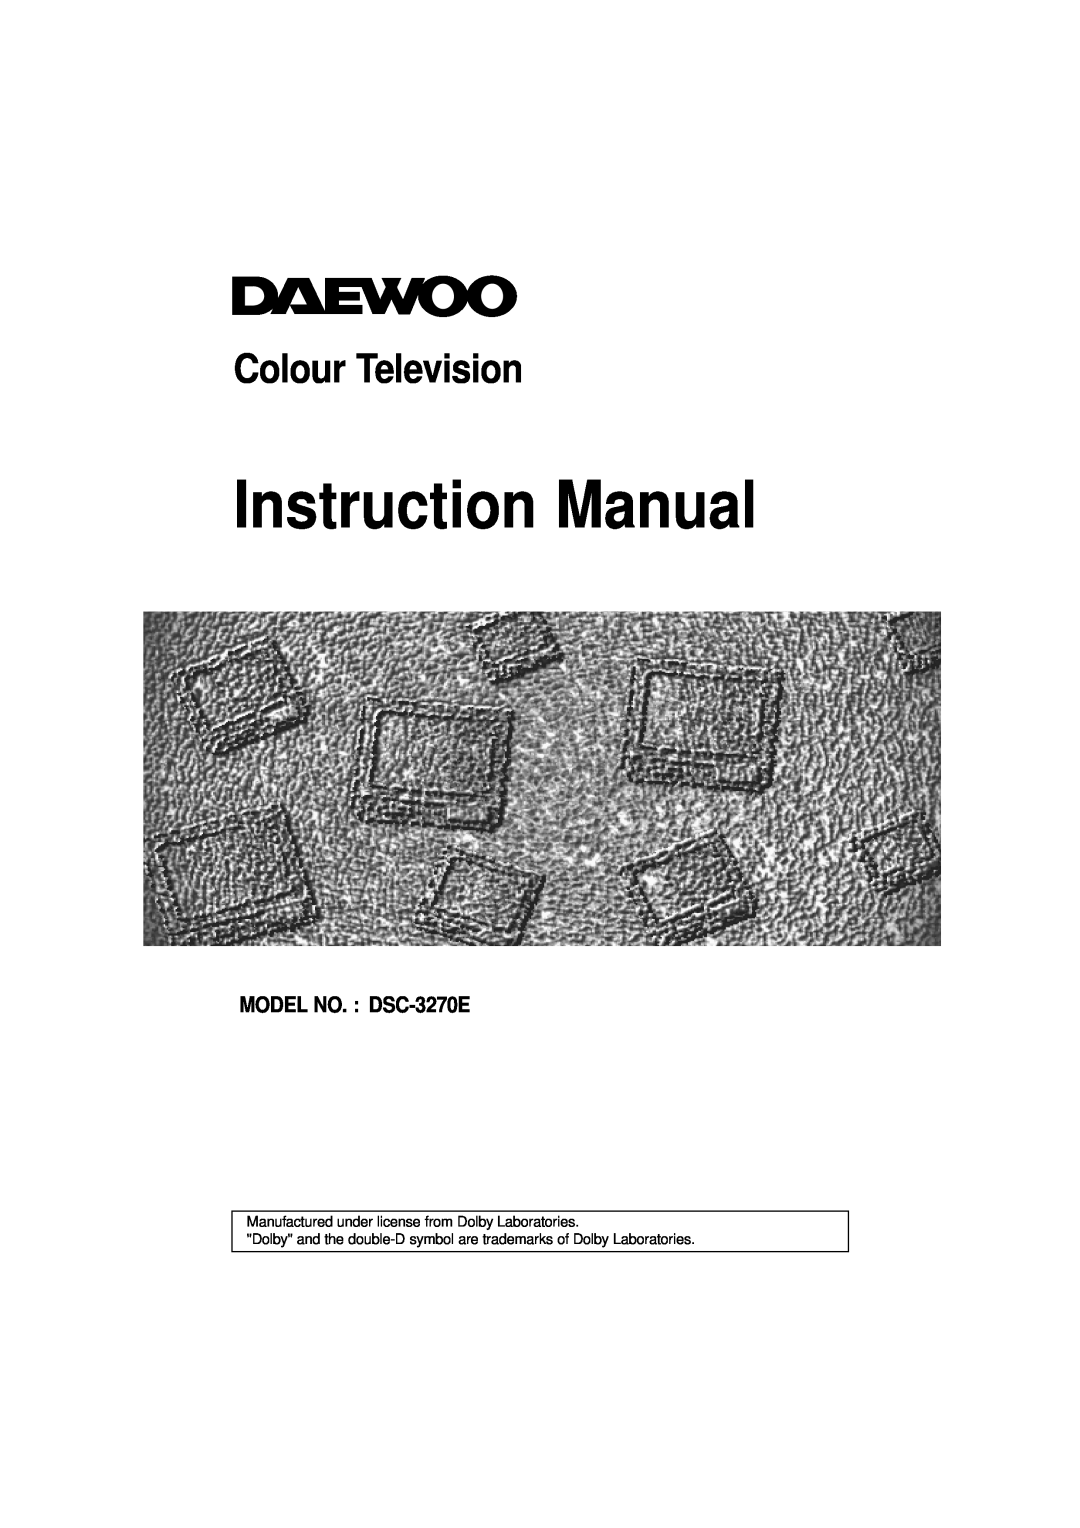 Daewoo instruction manual Instruction Manual, Colour Television, MODEL NO. DSC-3270E 